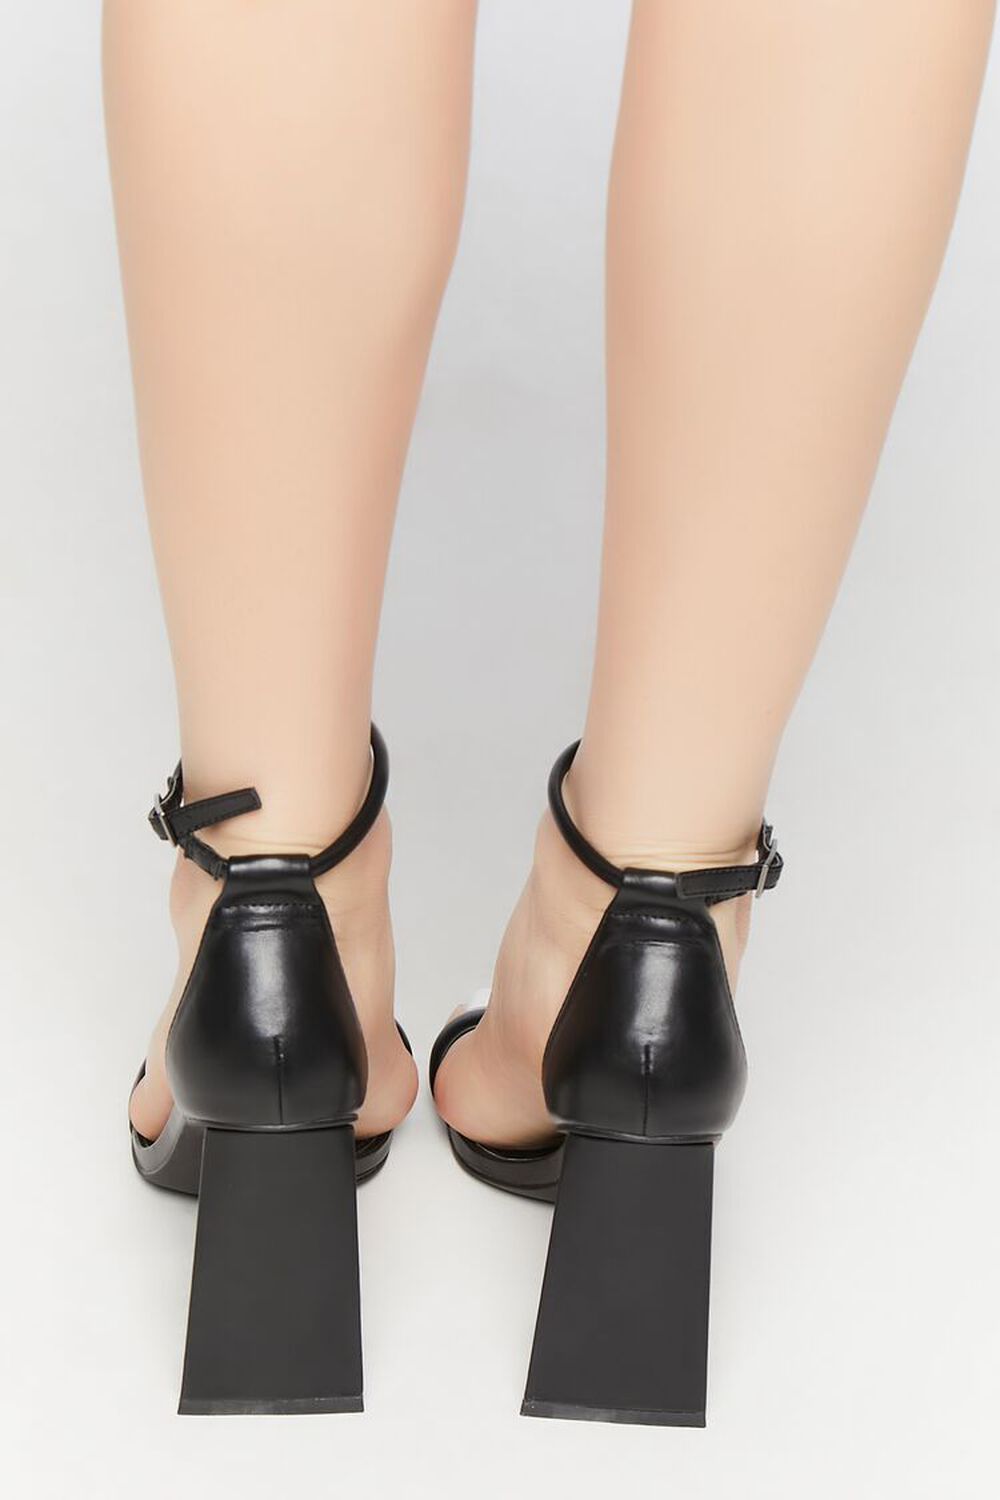 BLACK Faux Leather Open-Toe Flare Heels, image 3